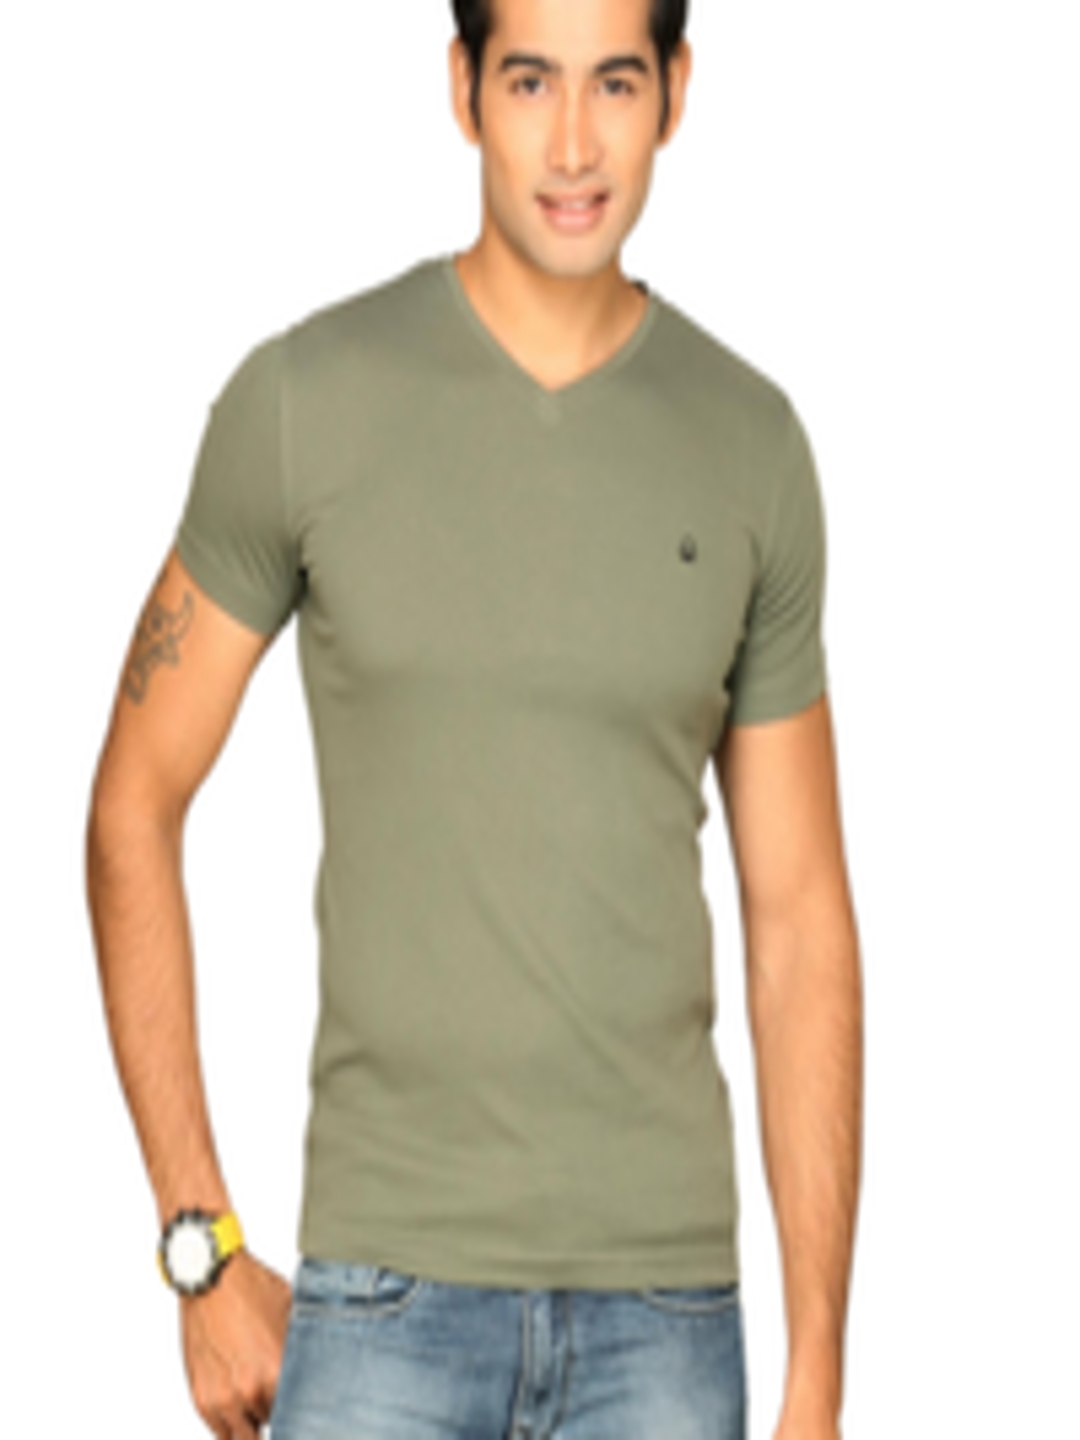 Buy UCB Men's Contrast Logo Olive Green T Shirt - Tshirts for Men 6243 ...